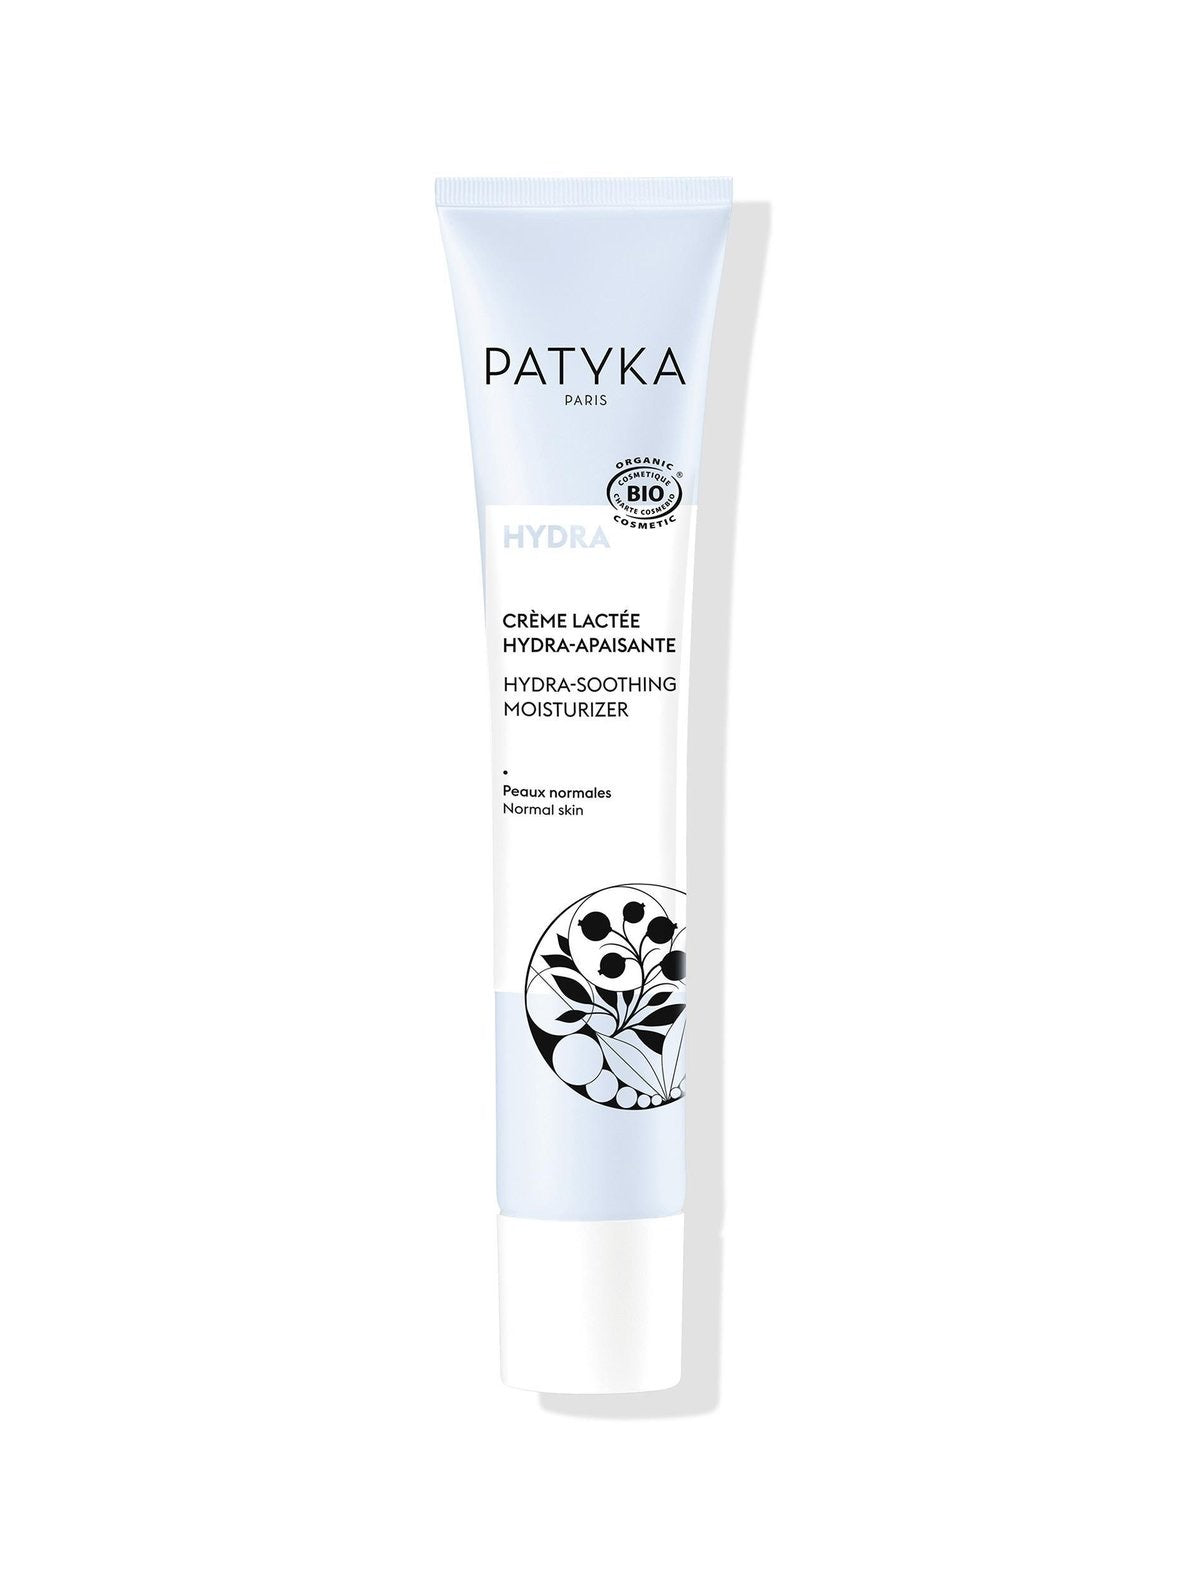 PATYKA HYDRA-SOOTHING 保濕補水霜 40ml